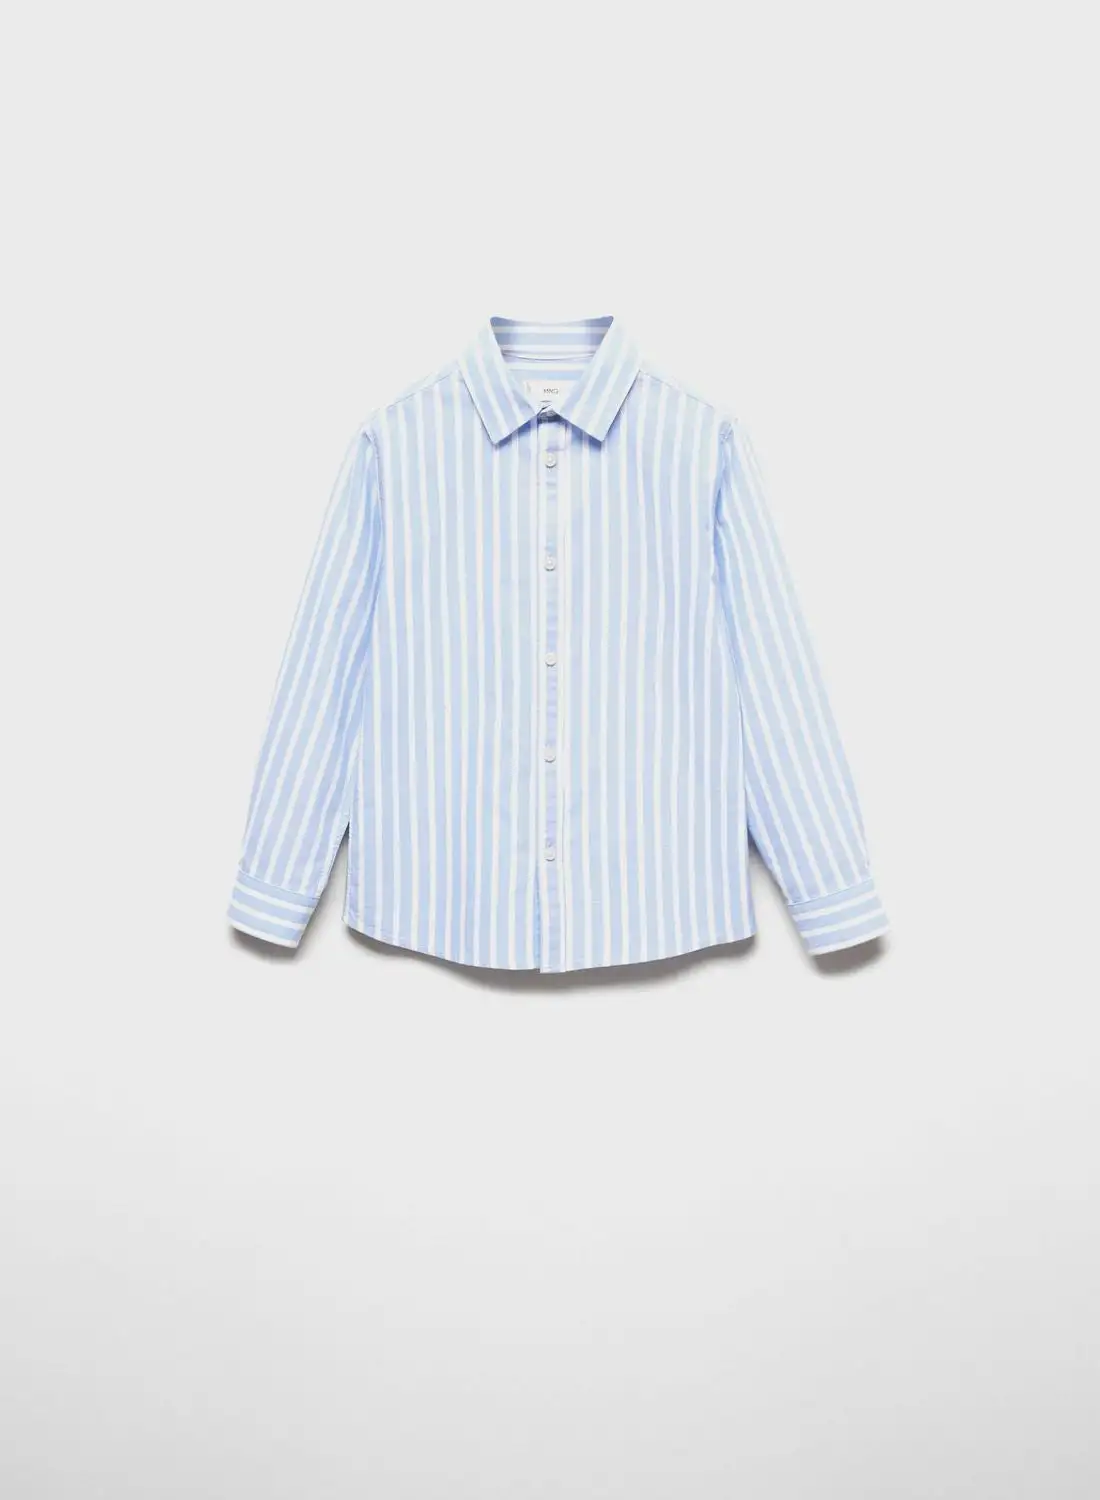 MANGO Infant Striped Shirt